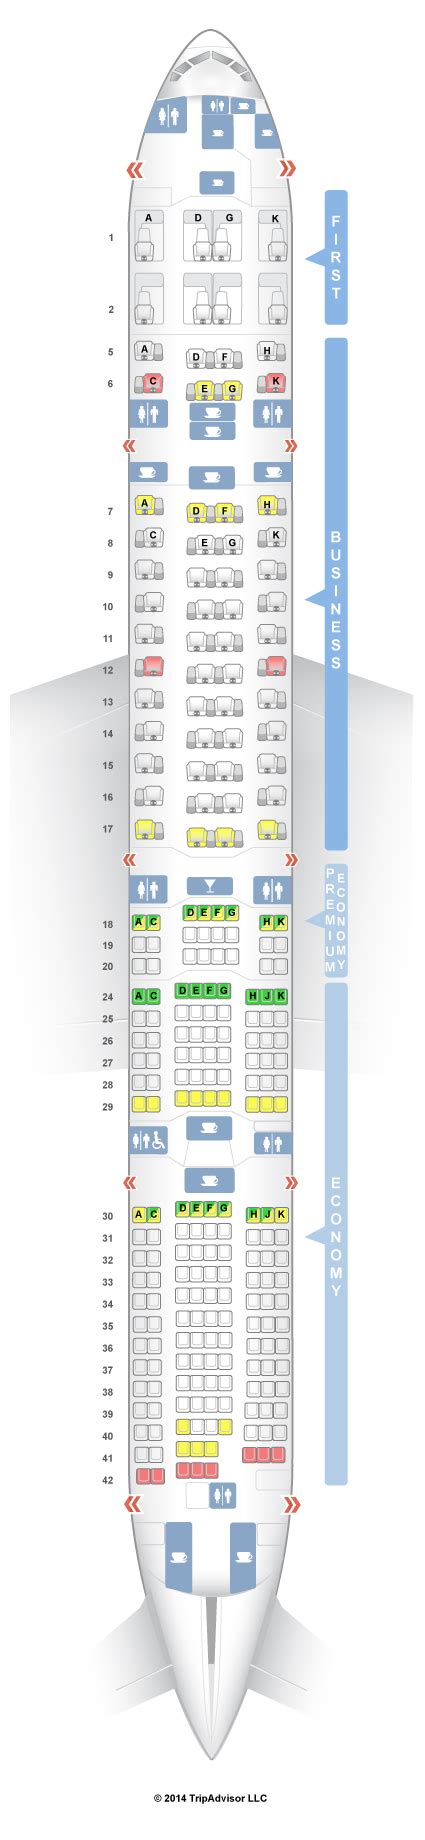 Seatguru Seat Map Ana Boeing 777 300er 77w V1